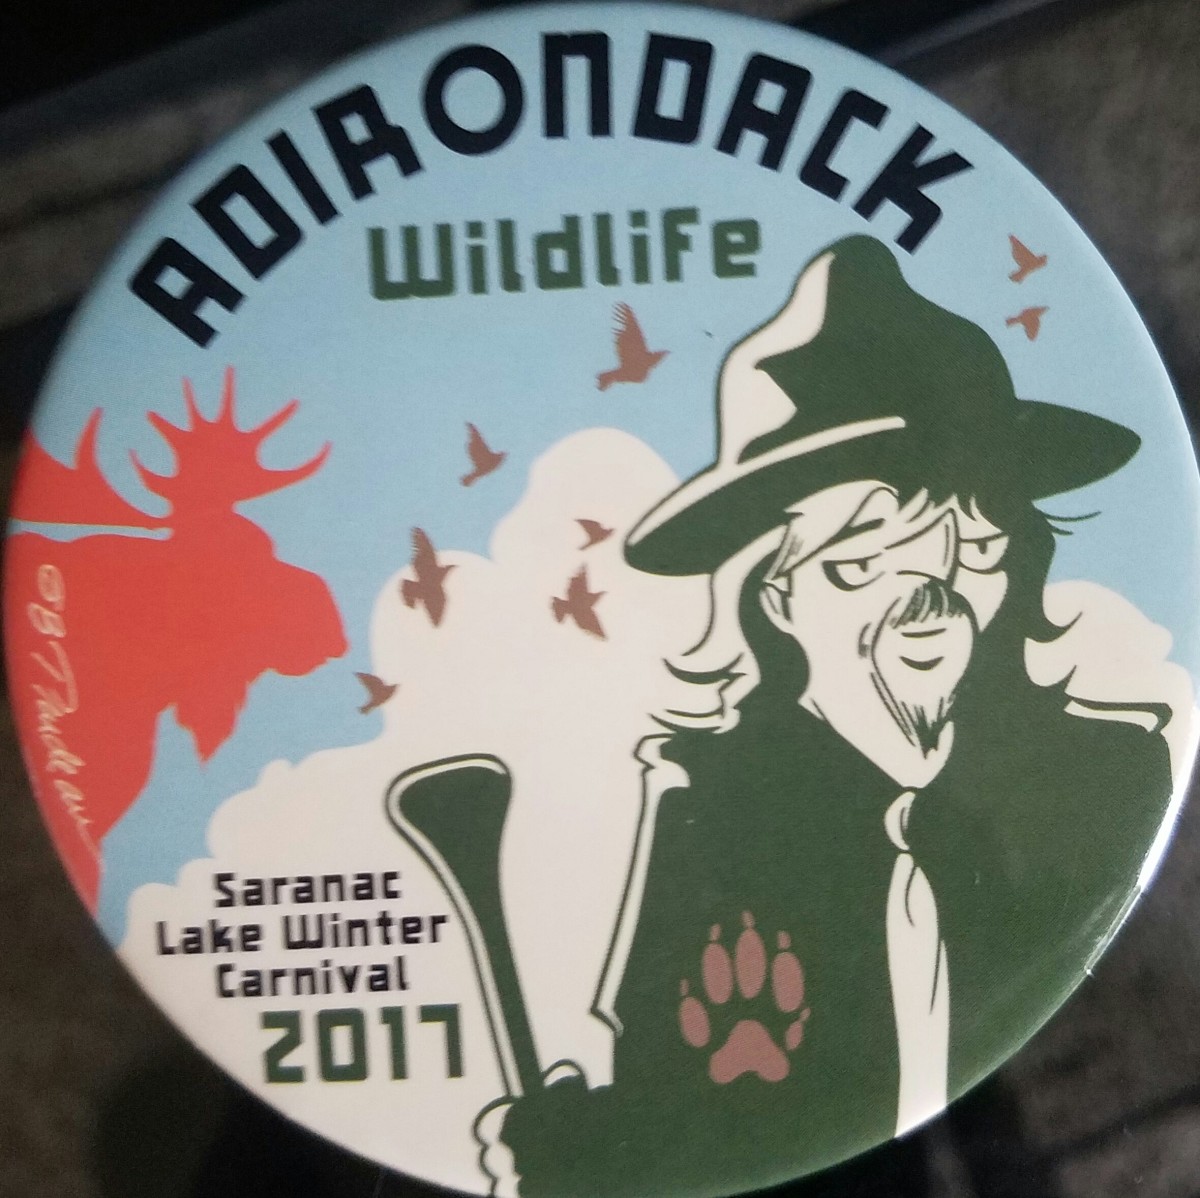 Adirondack Wildlife - Saranac Winter carnival 2017 by Garry Trudeau 